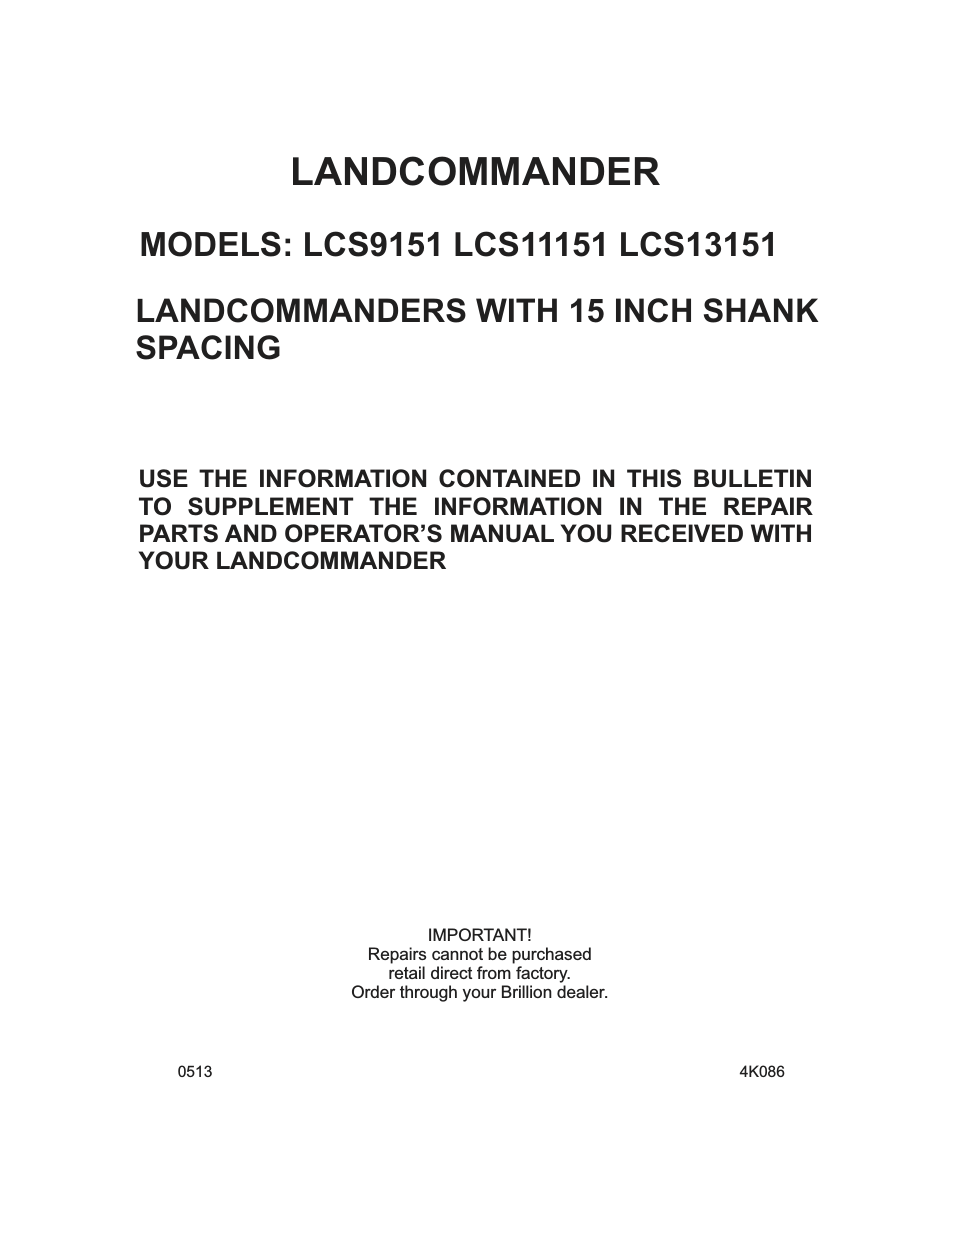 LCS9151 LANDCOMMANDER